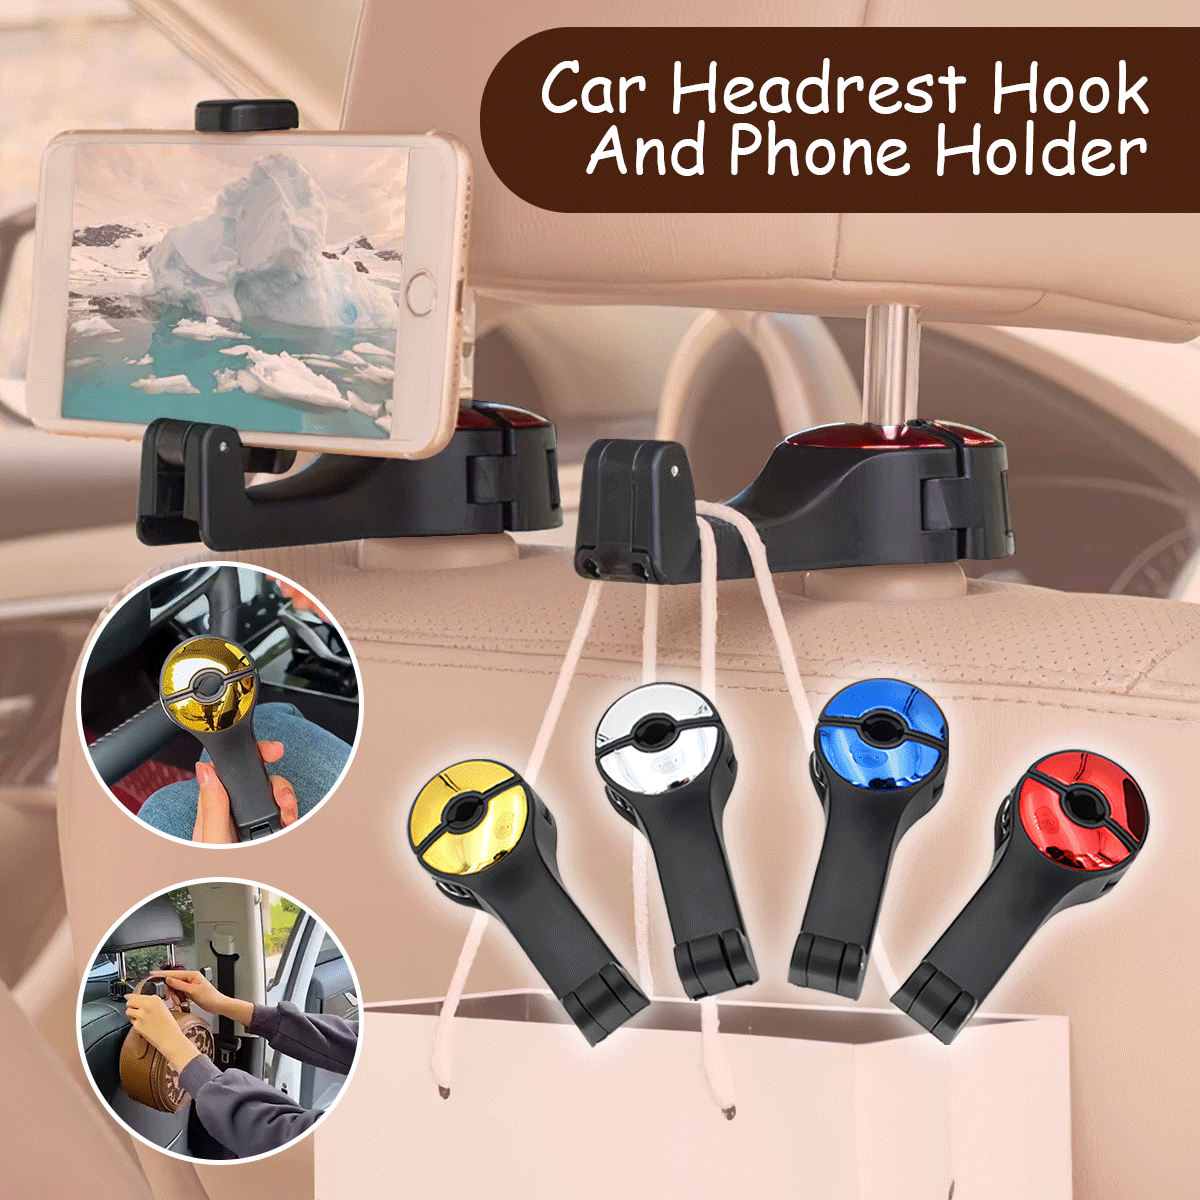 Car Headrest Hook And Phone Holder